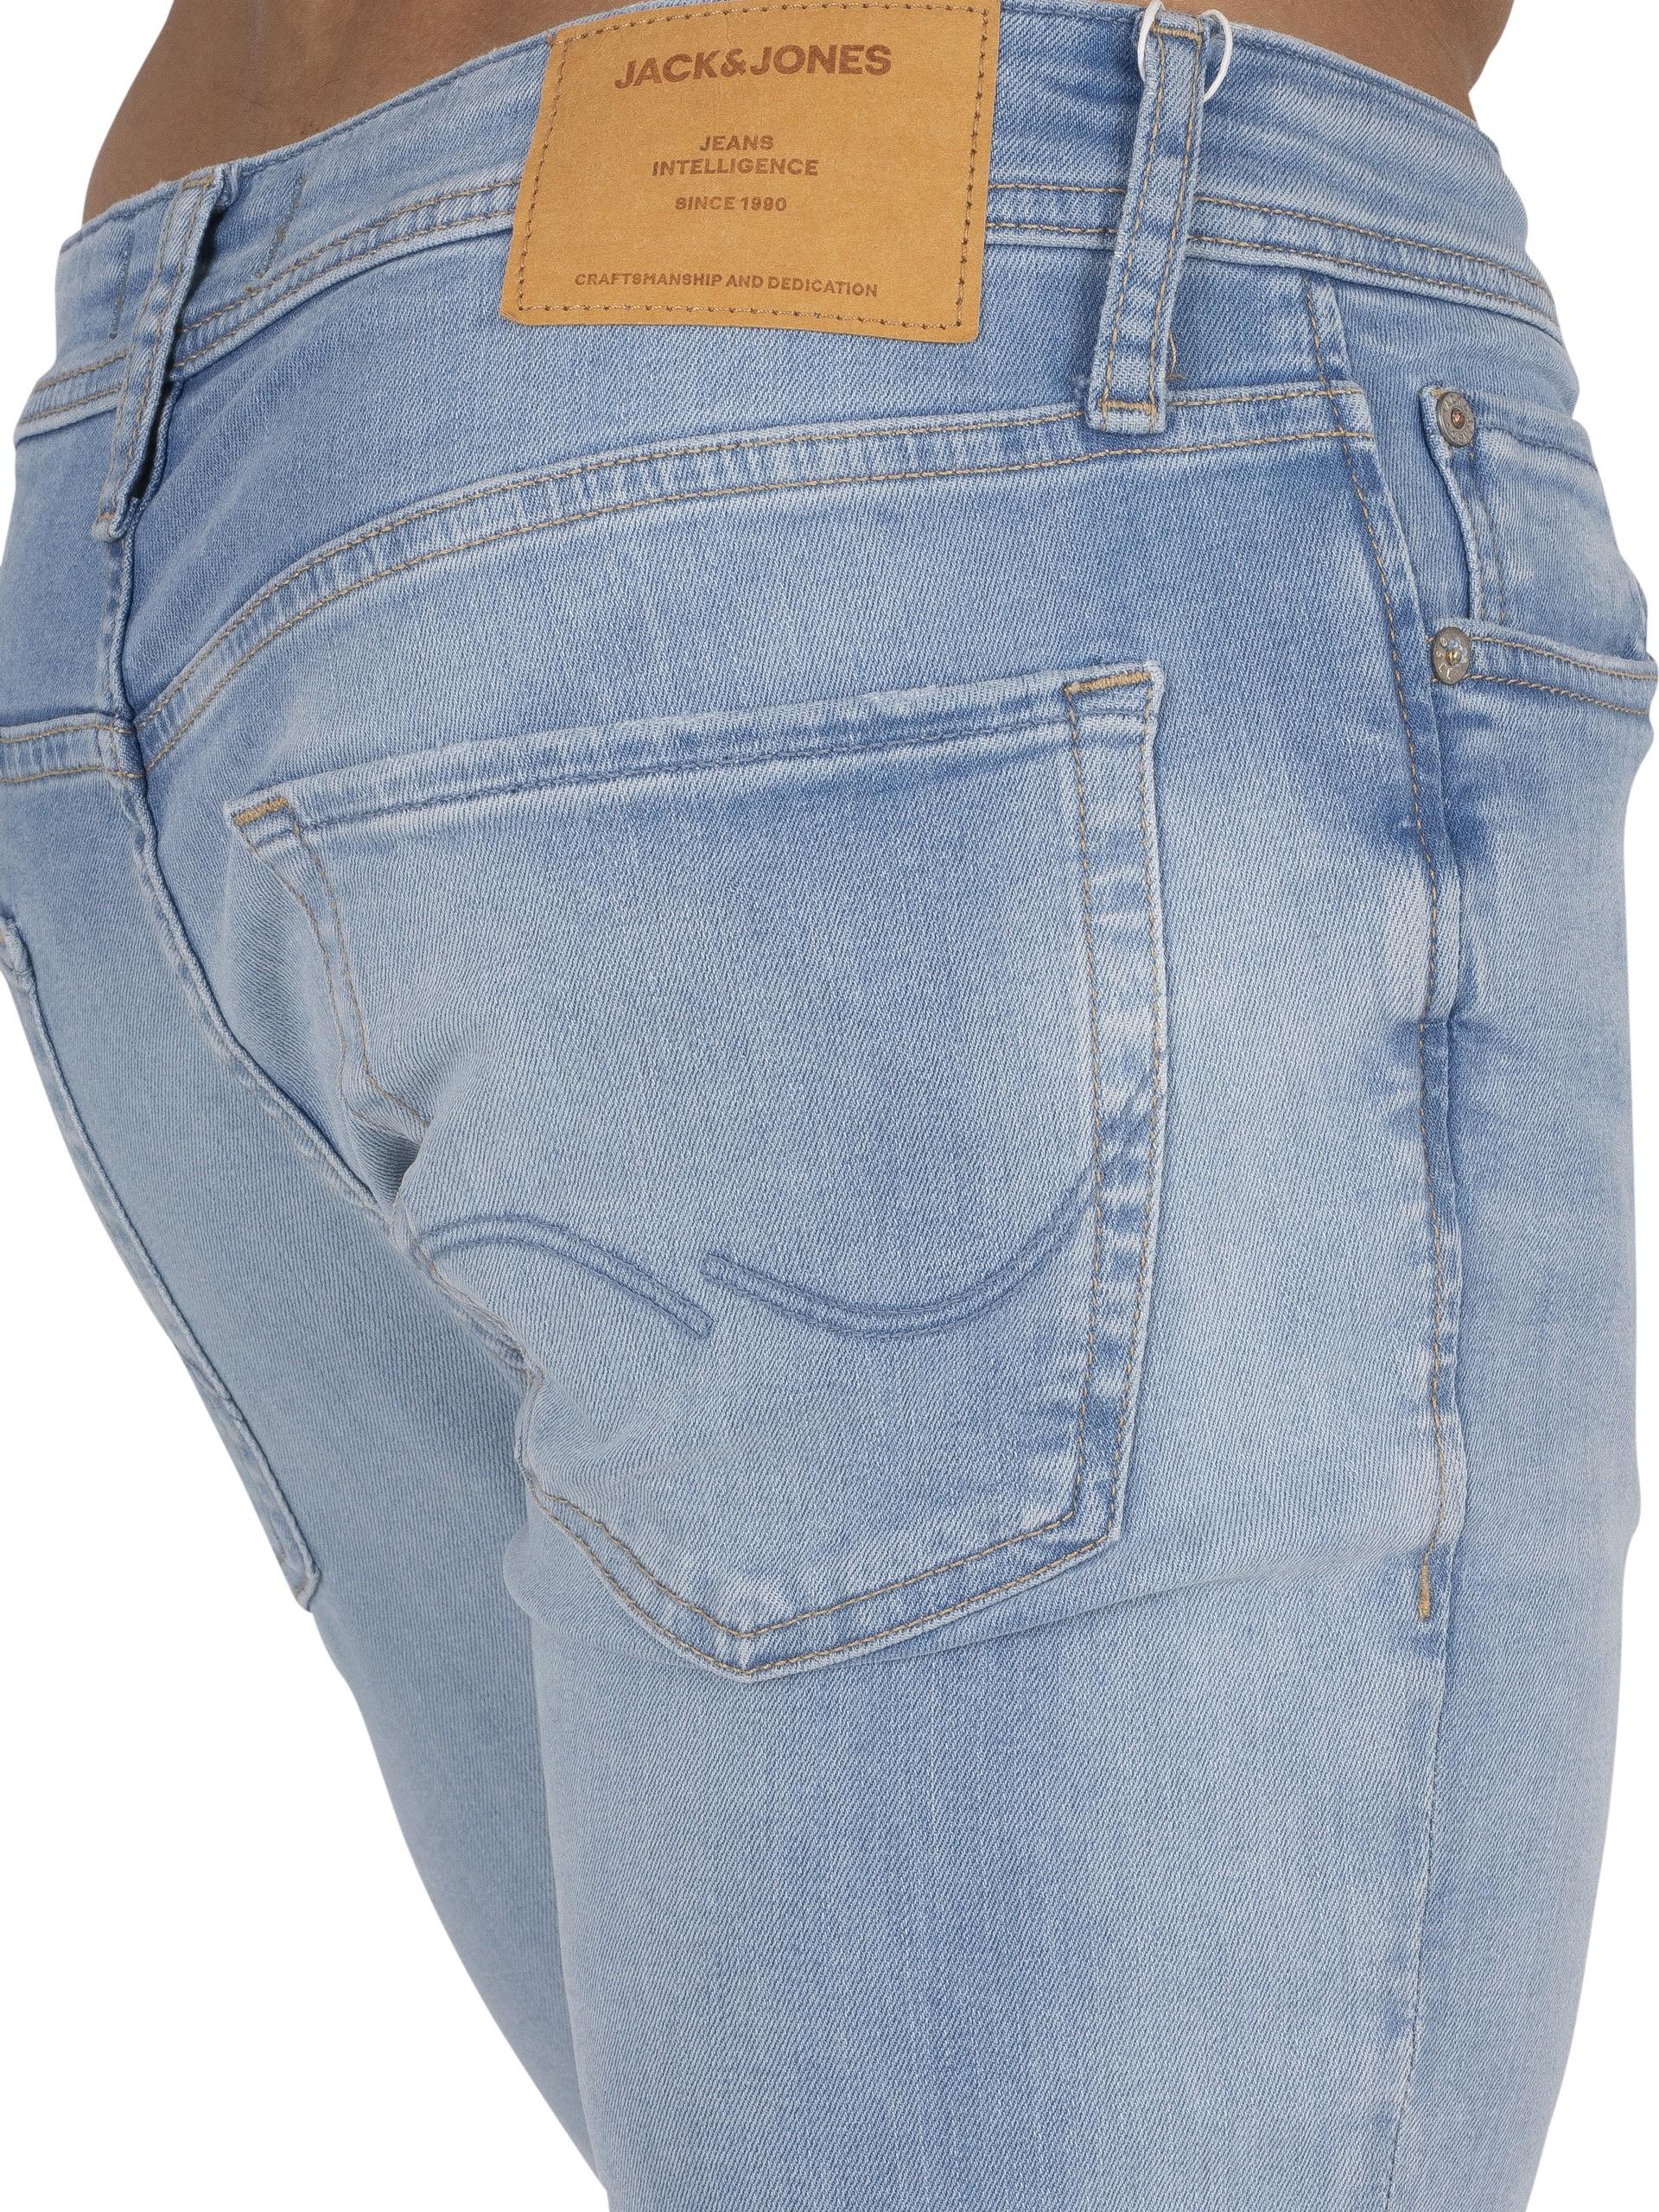 Jack & Jones Denim Liam Original 002 Skinny Jeans in Blue Denim (Blue) for  Men - Lyst